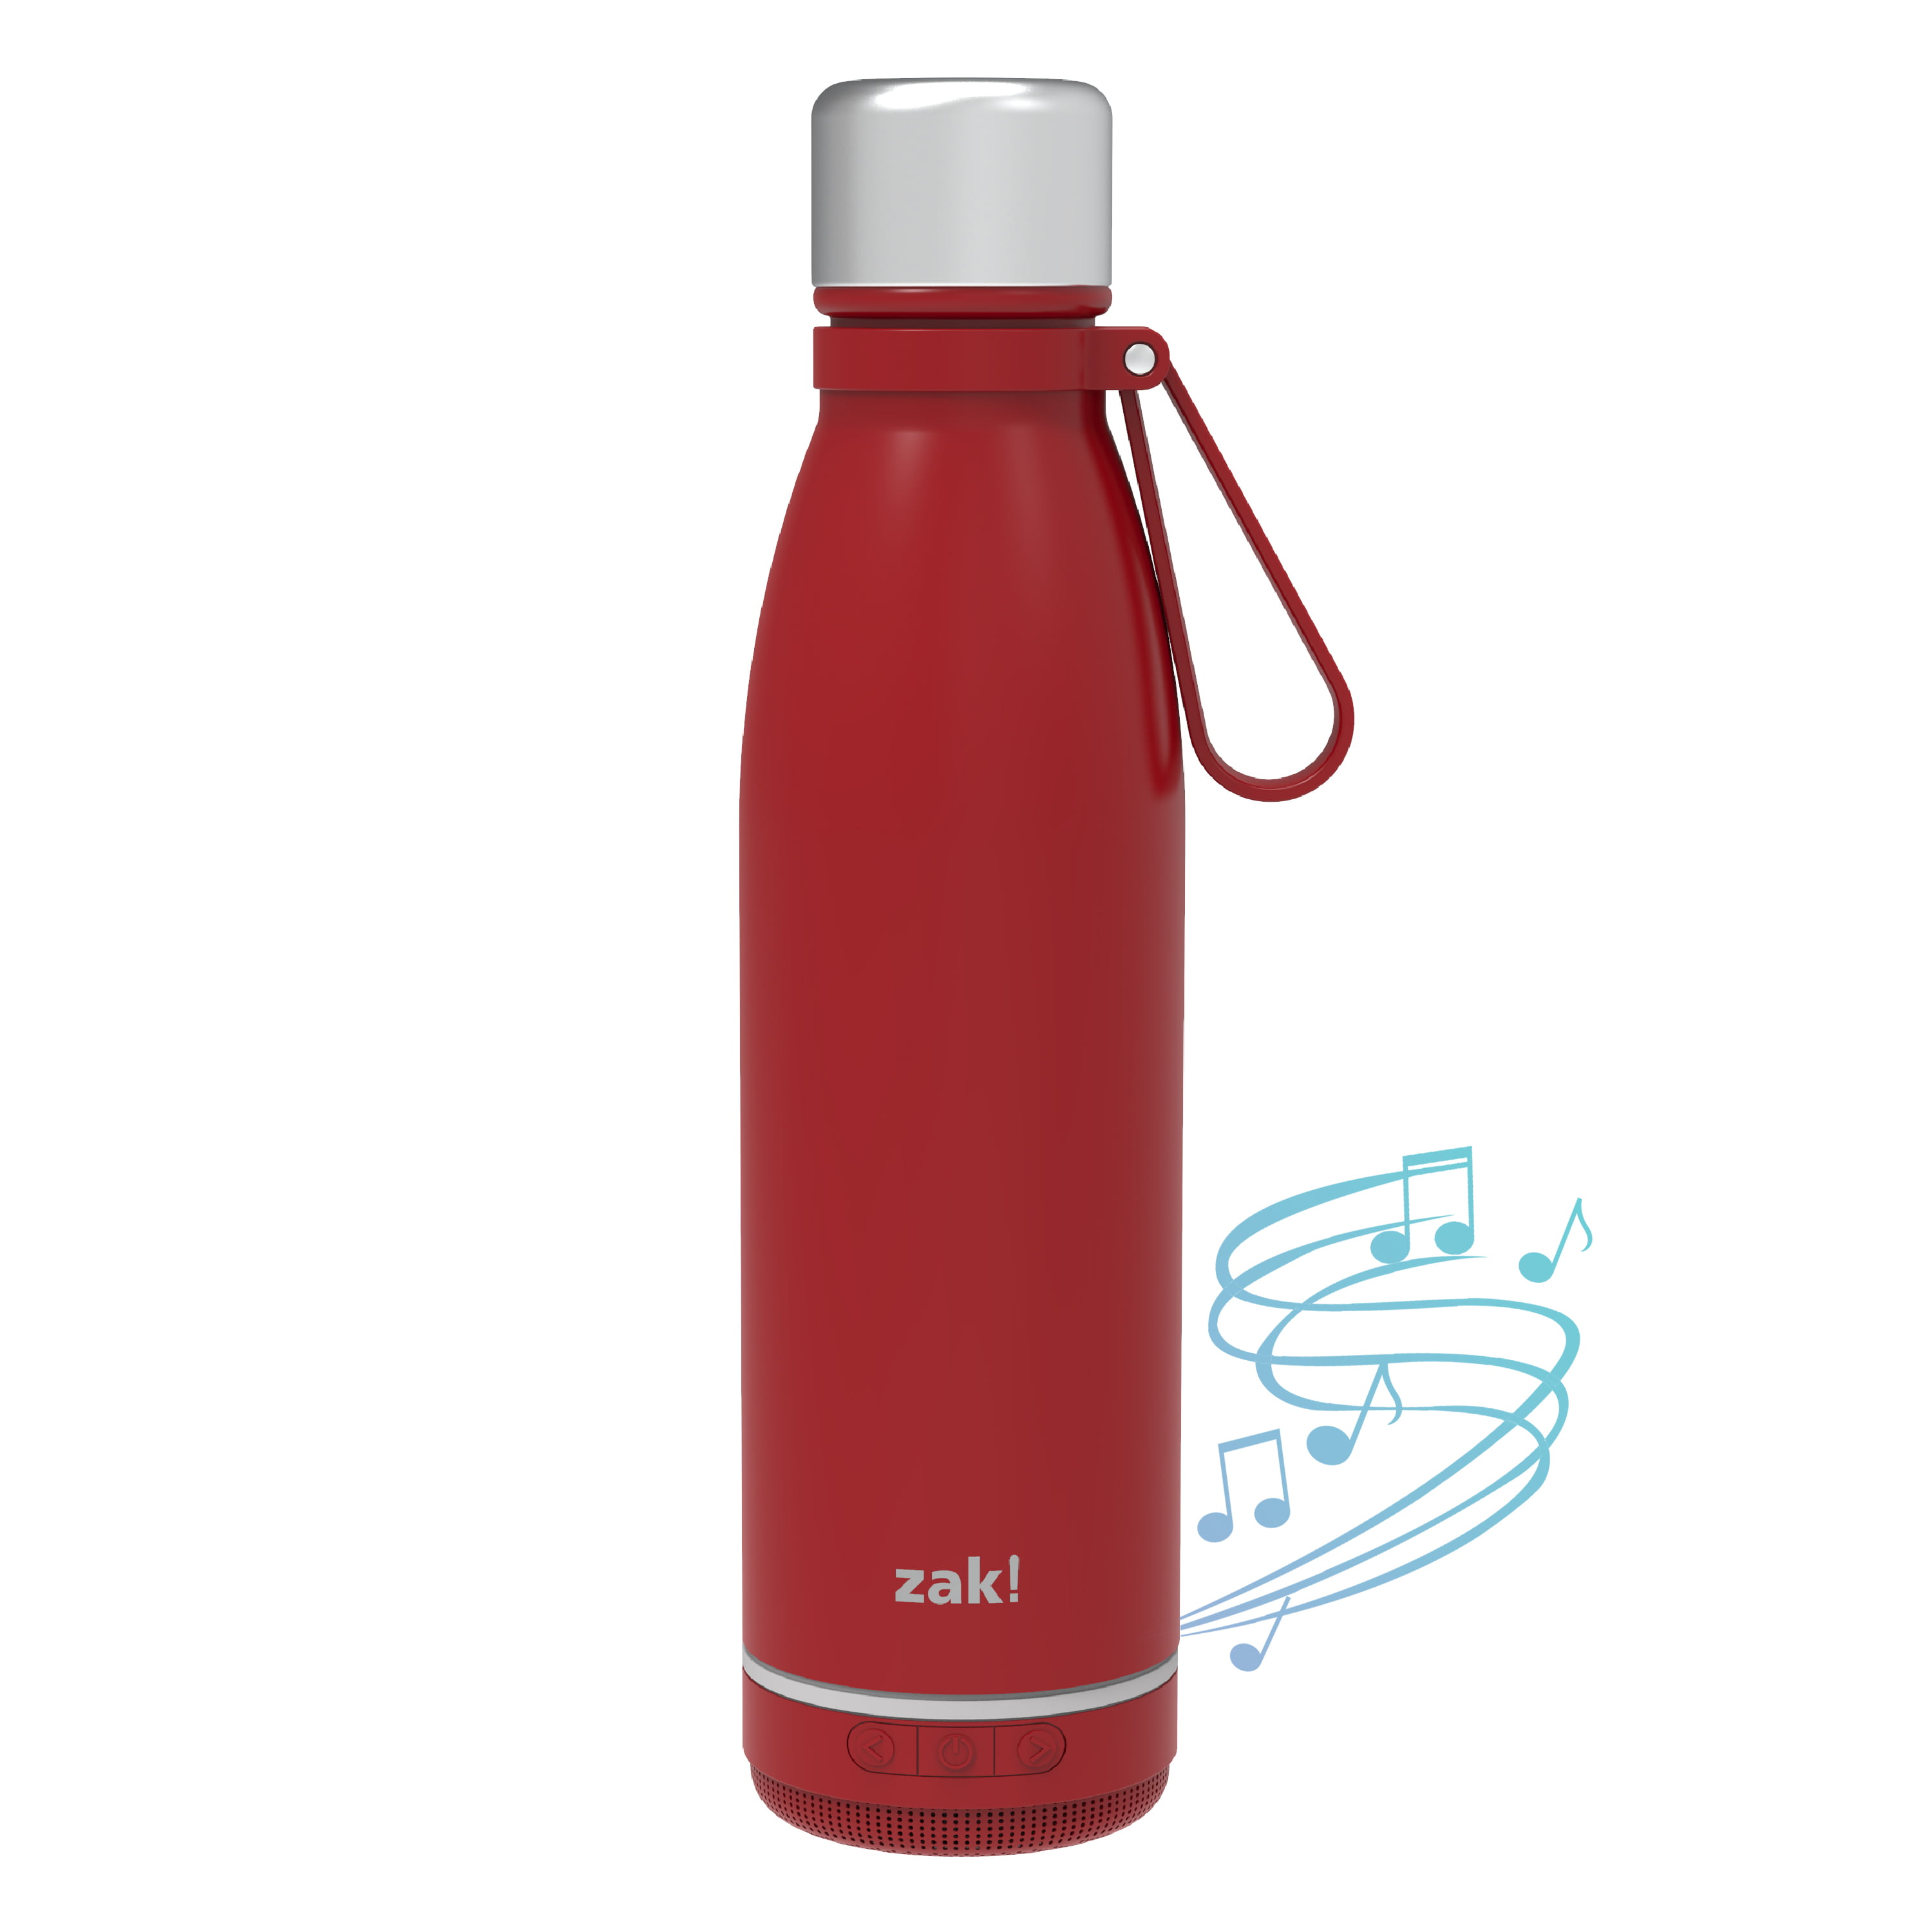 ozark trail 64 ounce double wall stainless steel water bottle